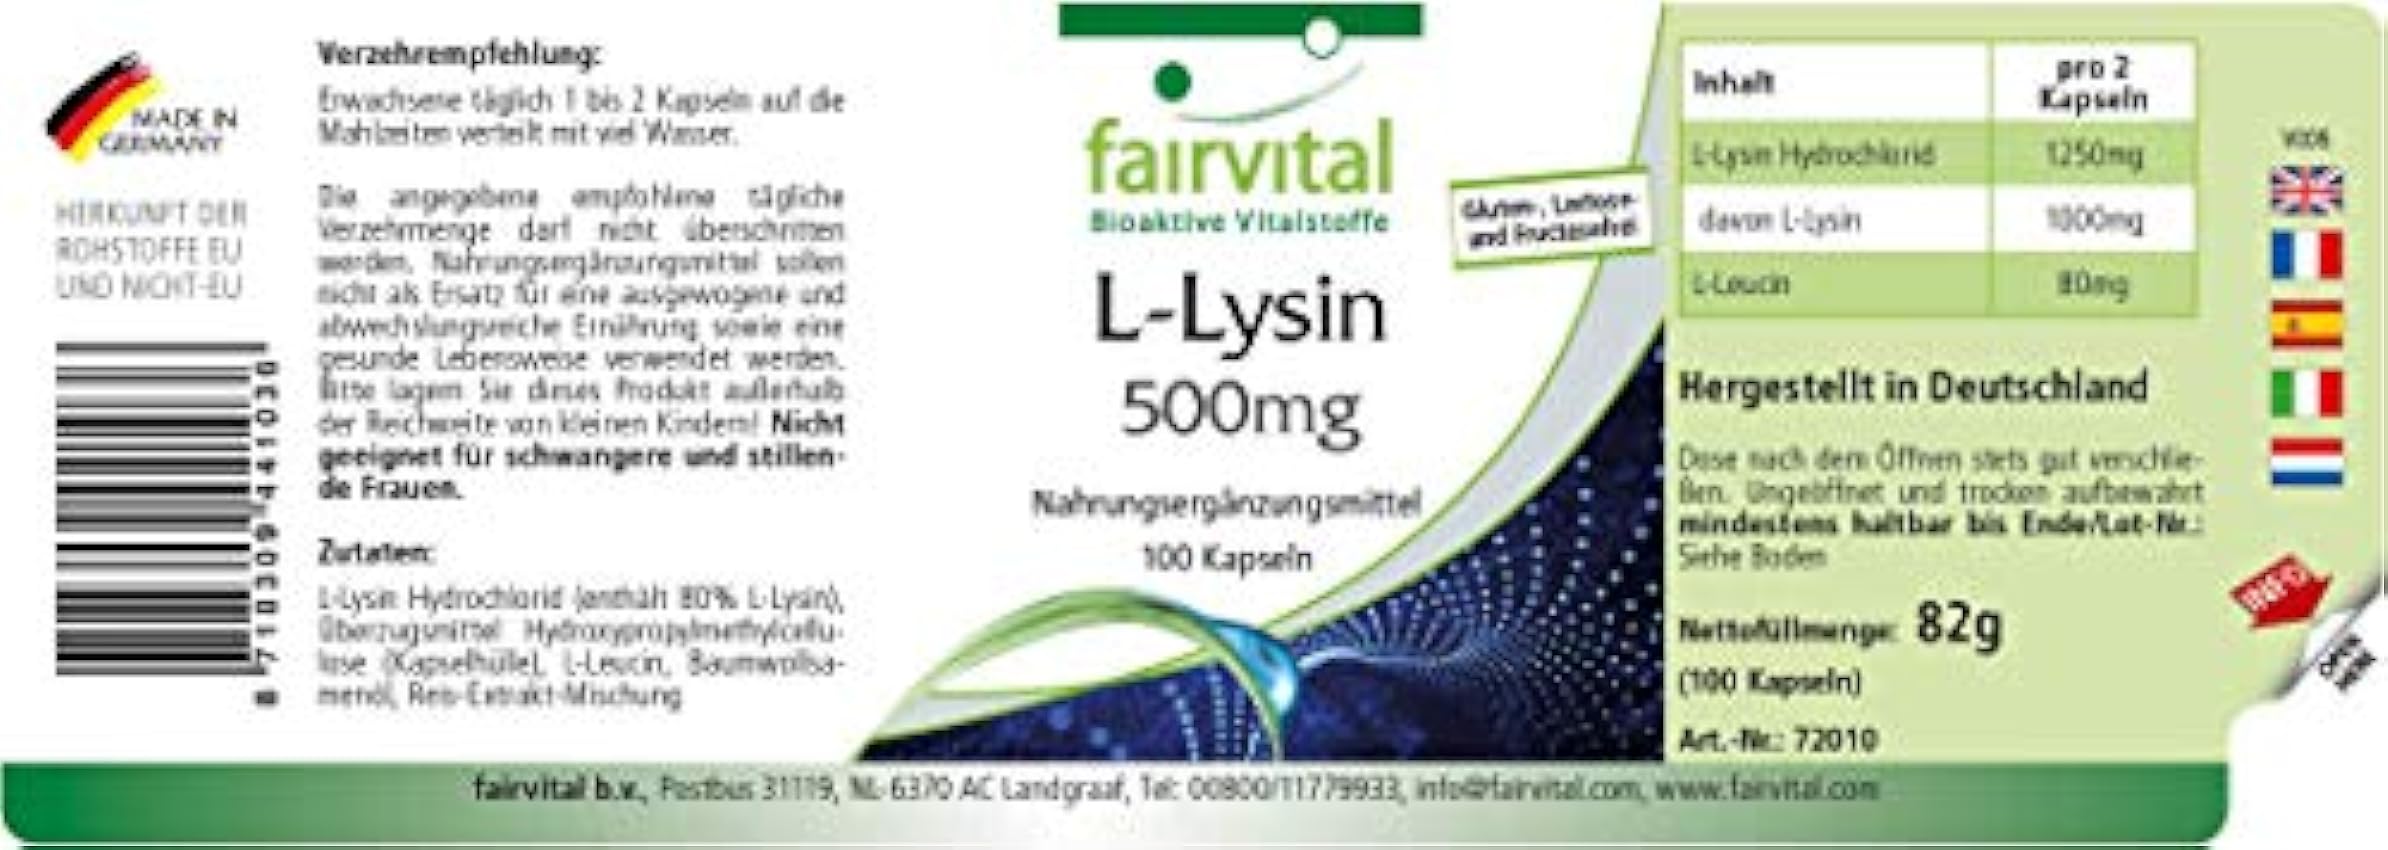 Fairvital | L-Lisina 500mg - Dosis elevada - VEGANA - L-Lisina HCl - Aminoácido esencial - 100 Cápsulas - Calidad Alemana JeGLMmUg